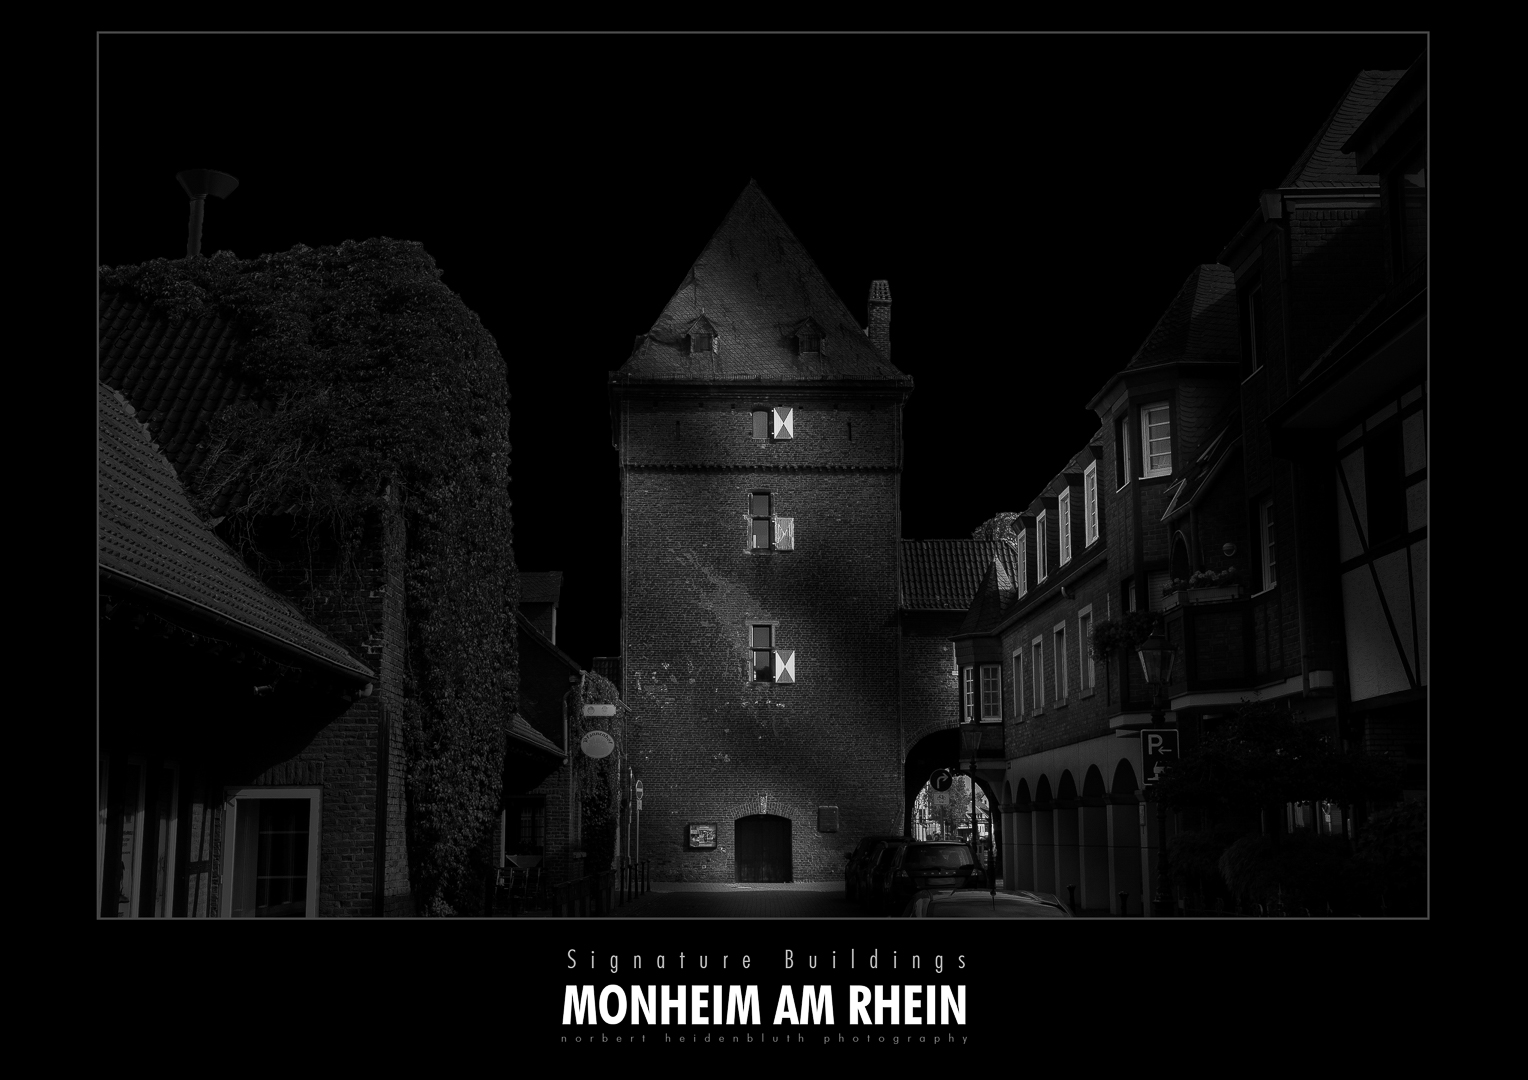 Teaserbild: Signature Buildings in Monheim am Rhein